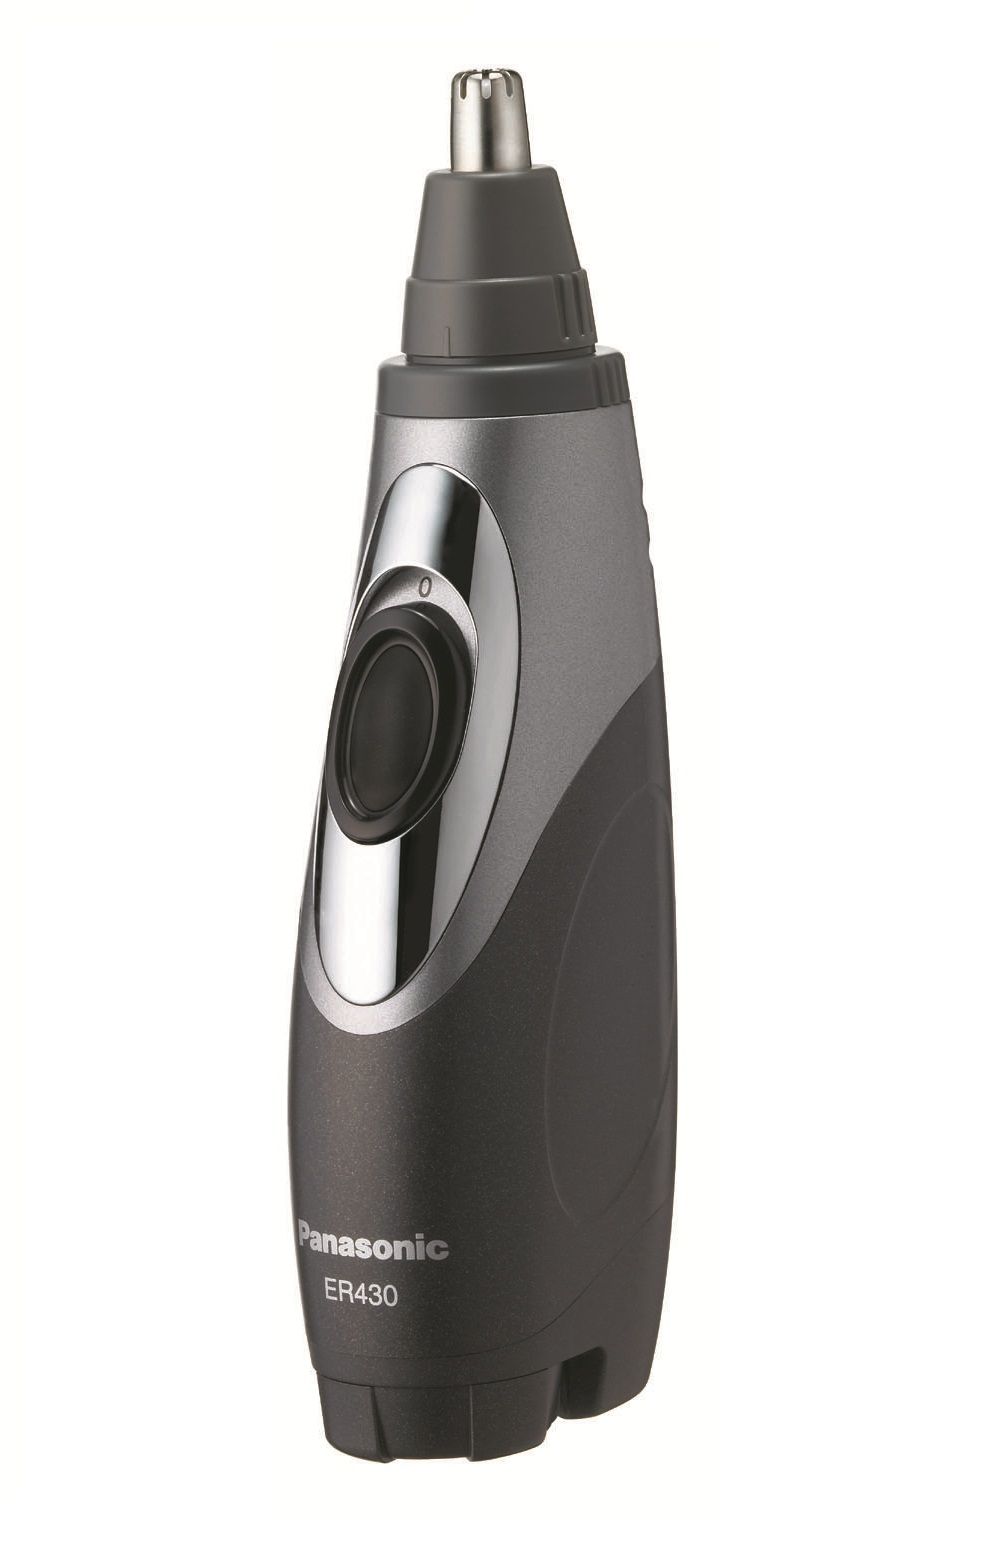 Panasonic Wet/Dry Nose & Ear Hair Trimmer